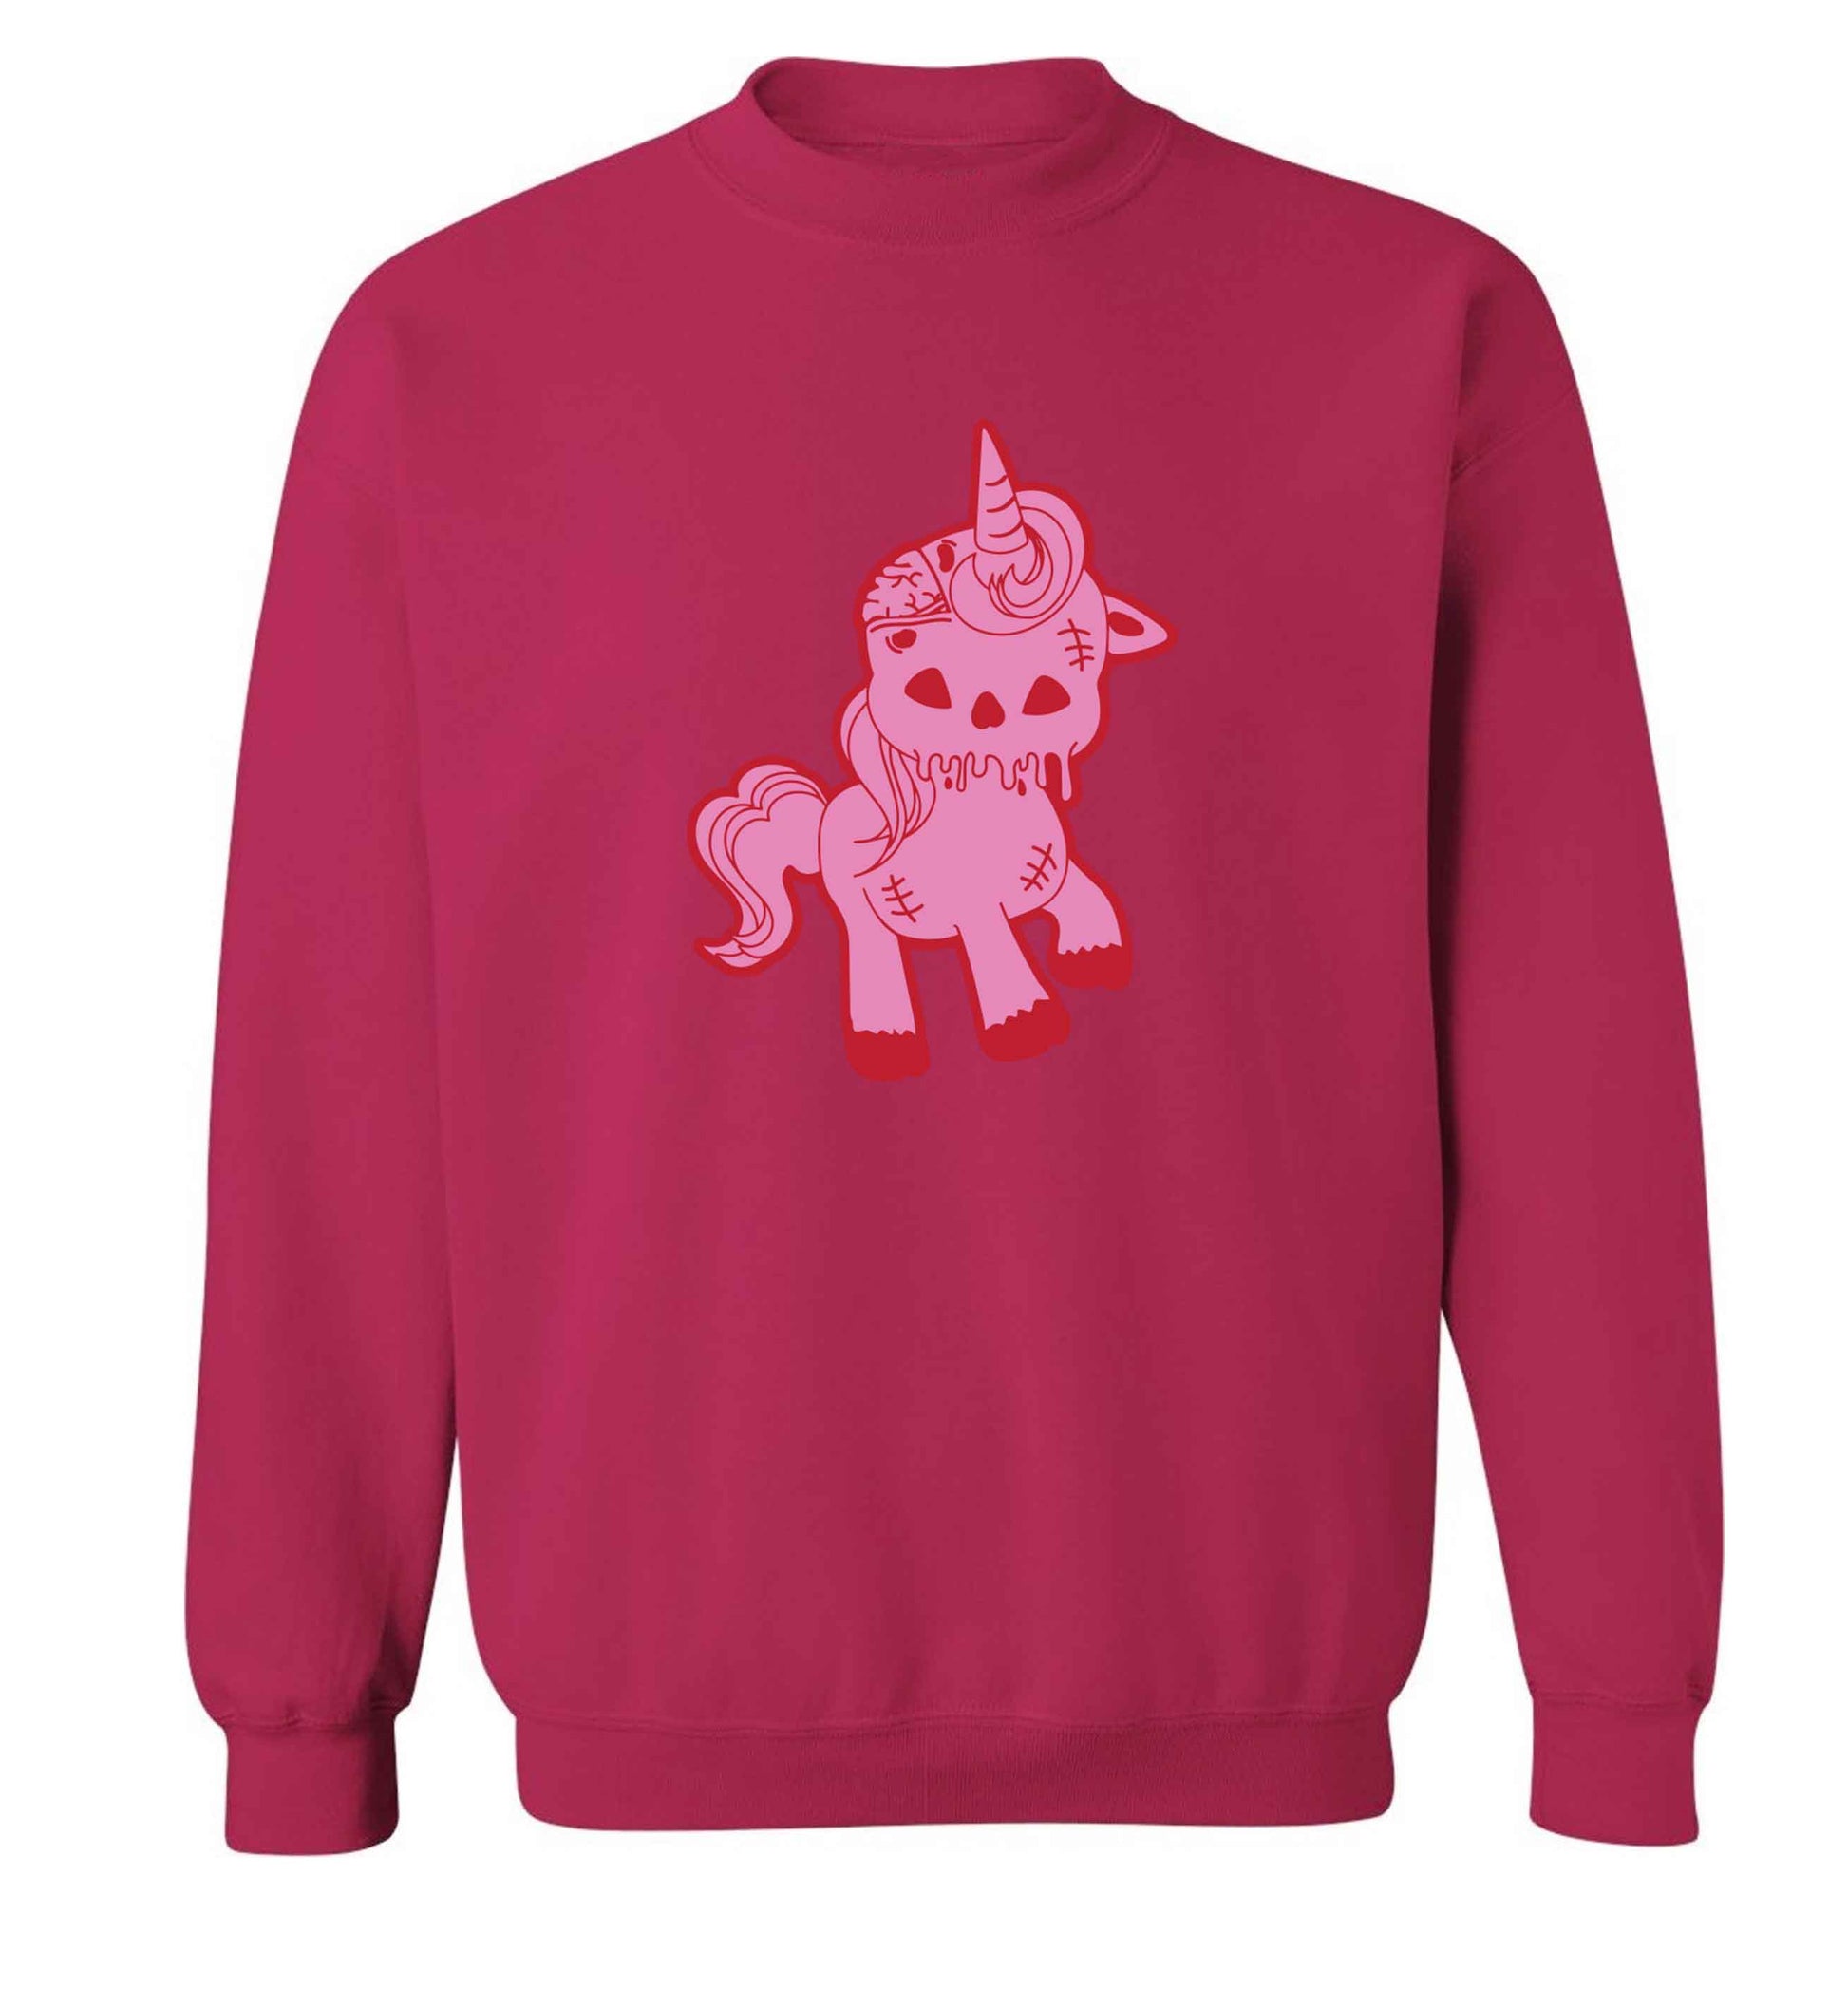 Zombie unicorn zombiecorn adult's unisex pink sweater 2XL